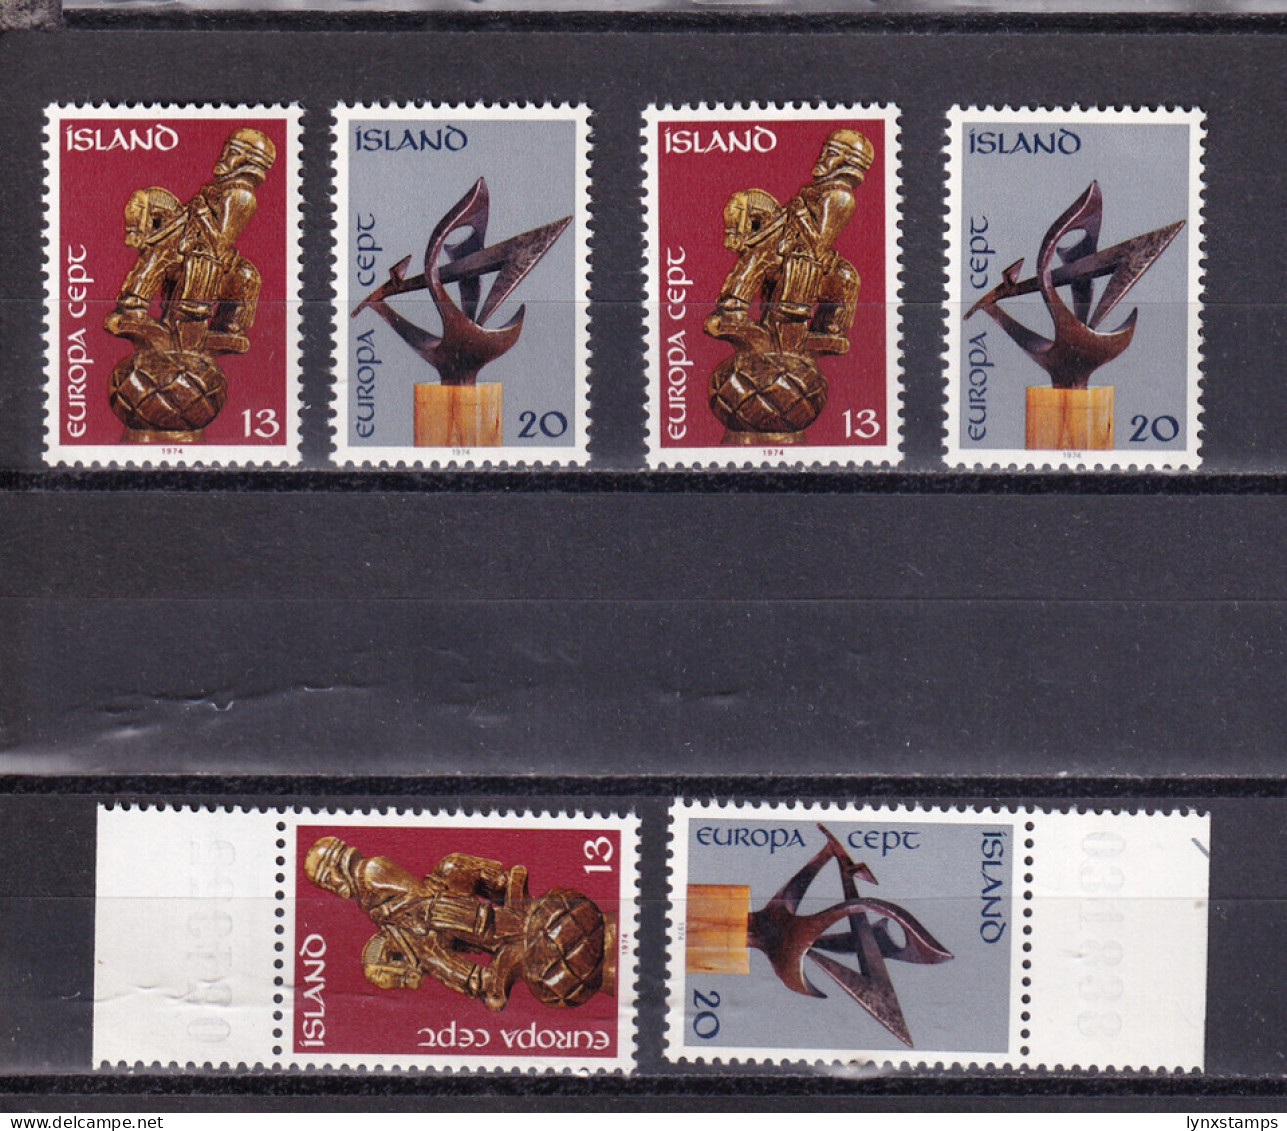 LI03 Iceland Europa (C.E.P.T.) 1974 - Sculptures Mint Stamps Selection - Neufs